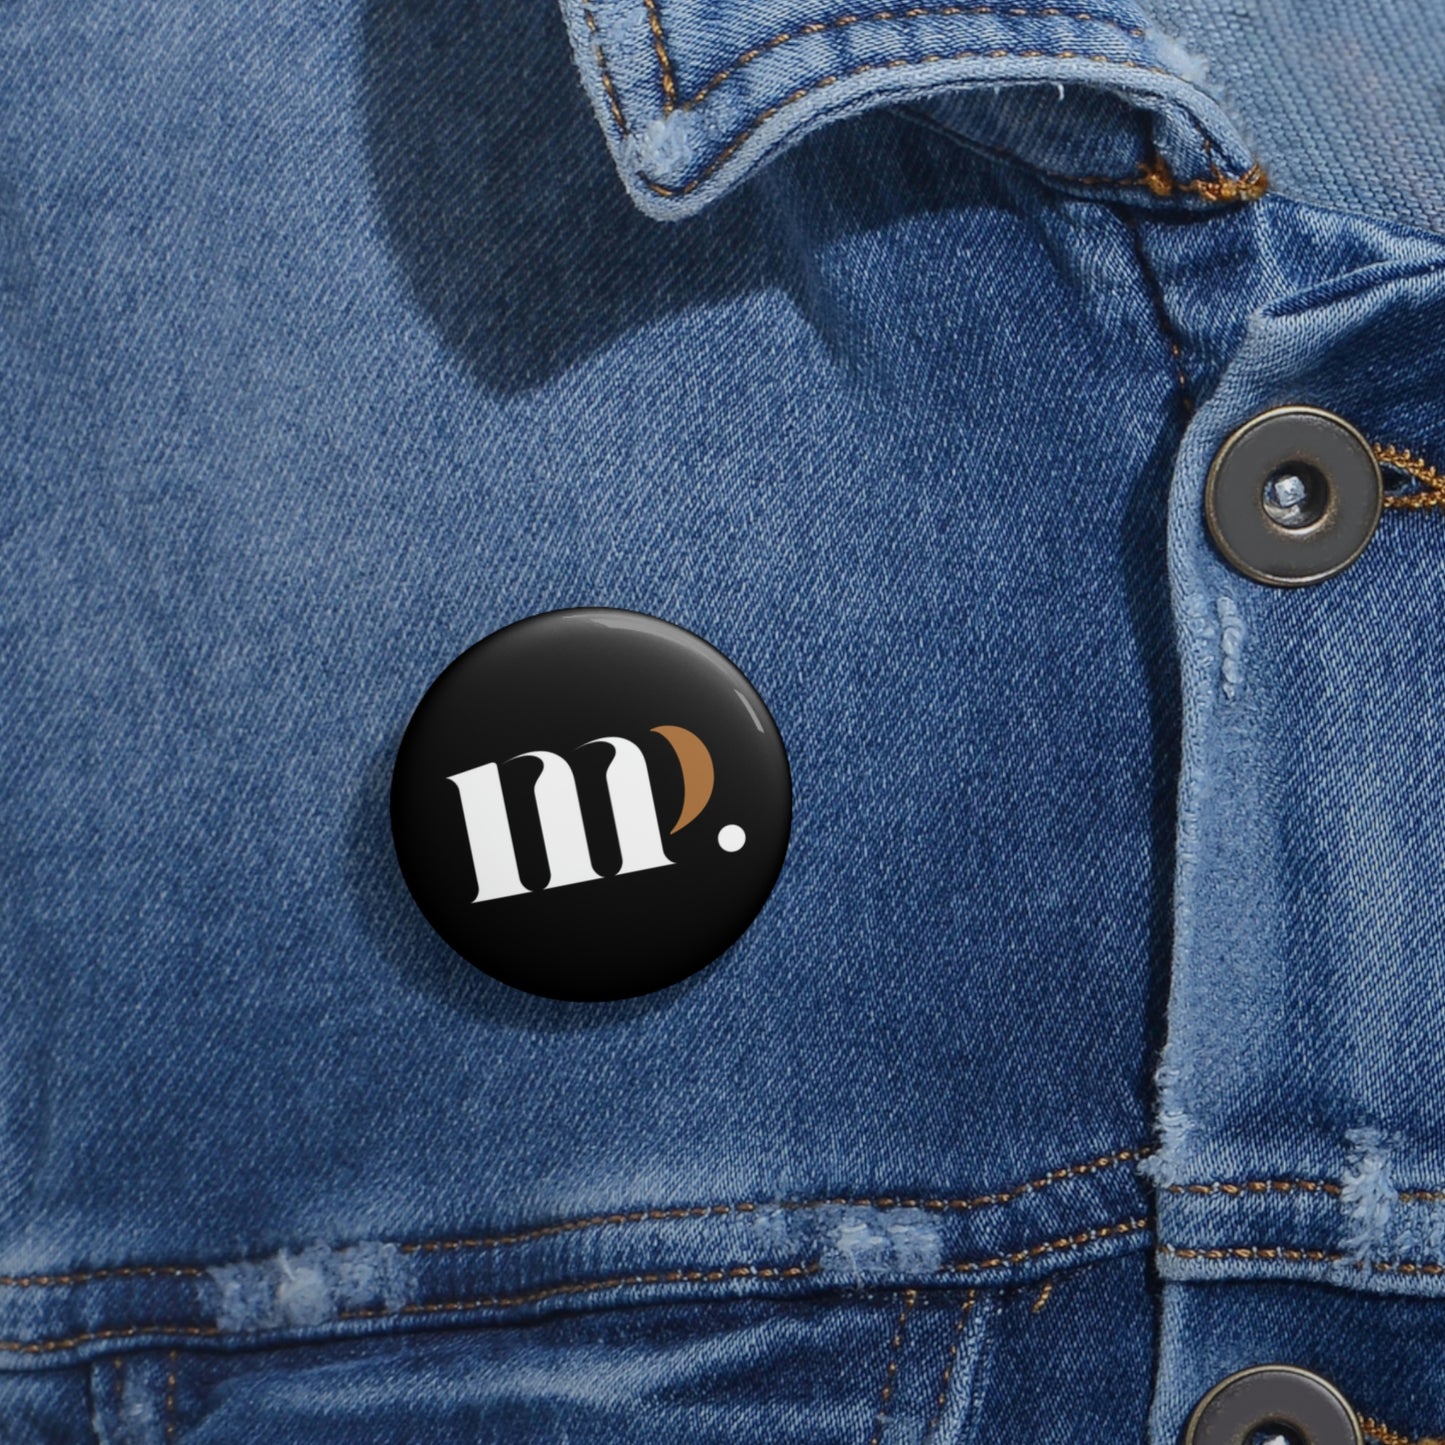 melanin on paper logo Pin Buttons